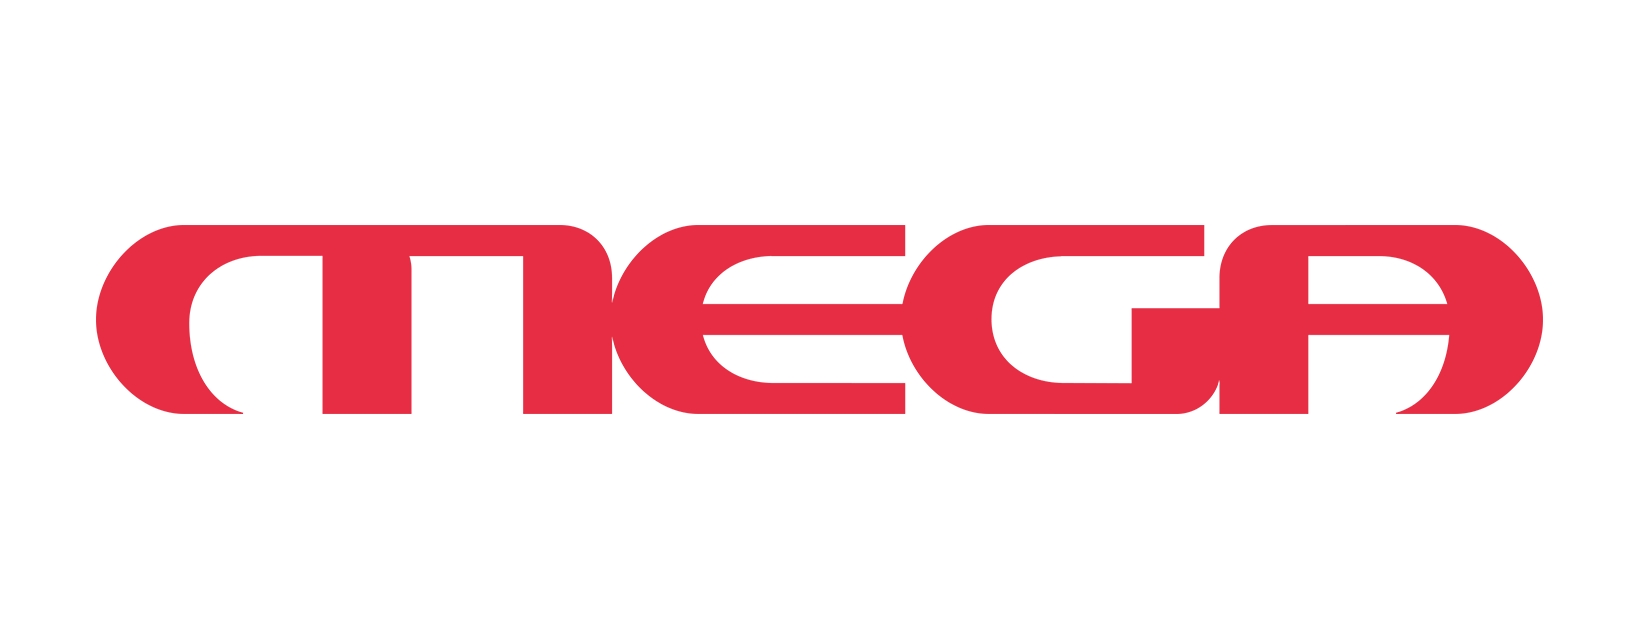 mega red logo